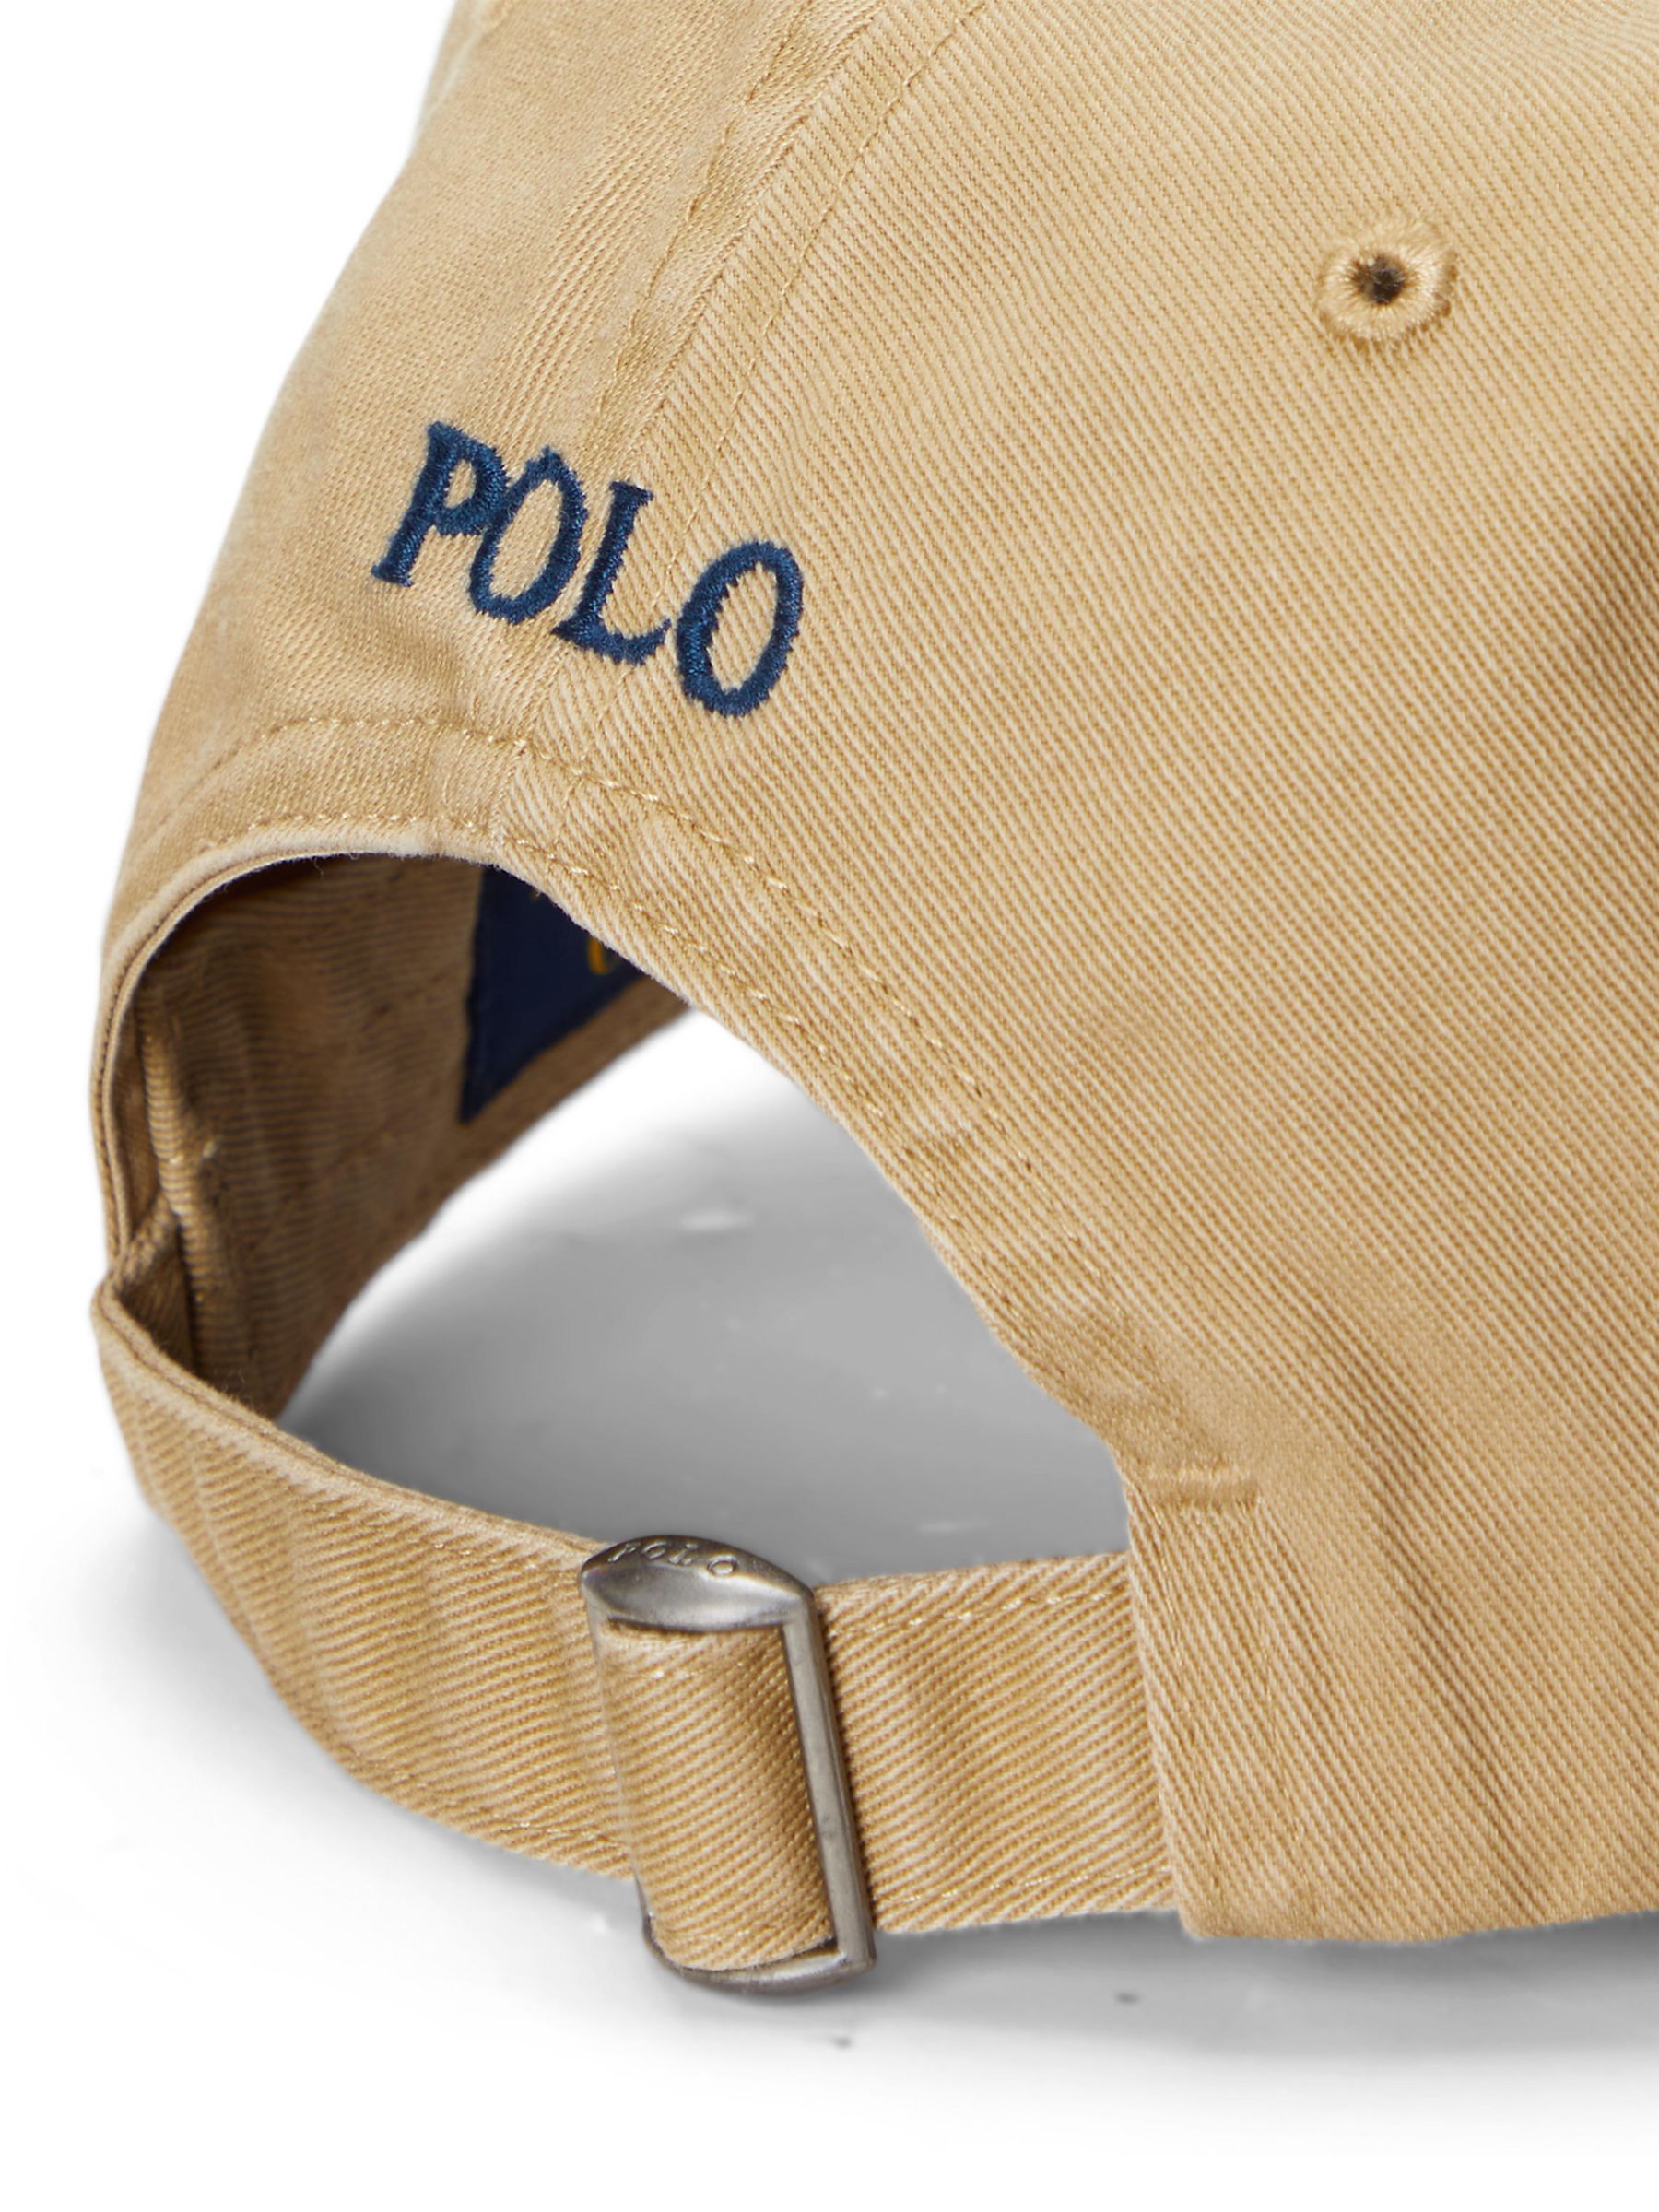 Buy Polo Ralph Lauren Signature Pony Baseball Cap Online at johnlewis.com